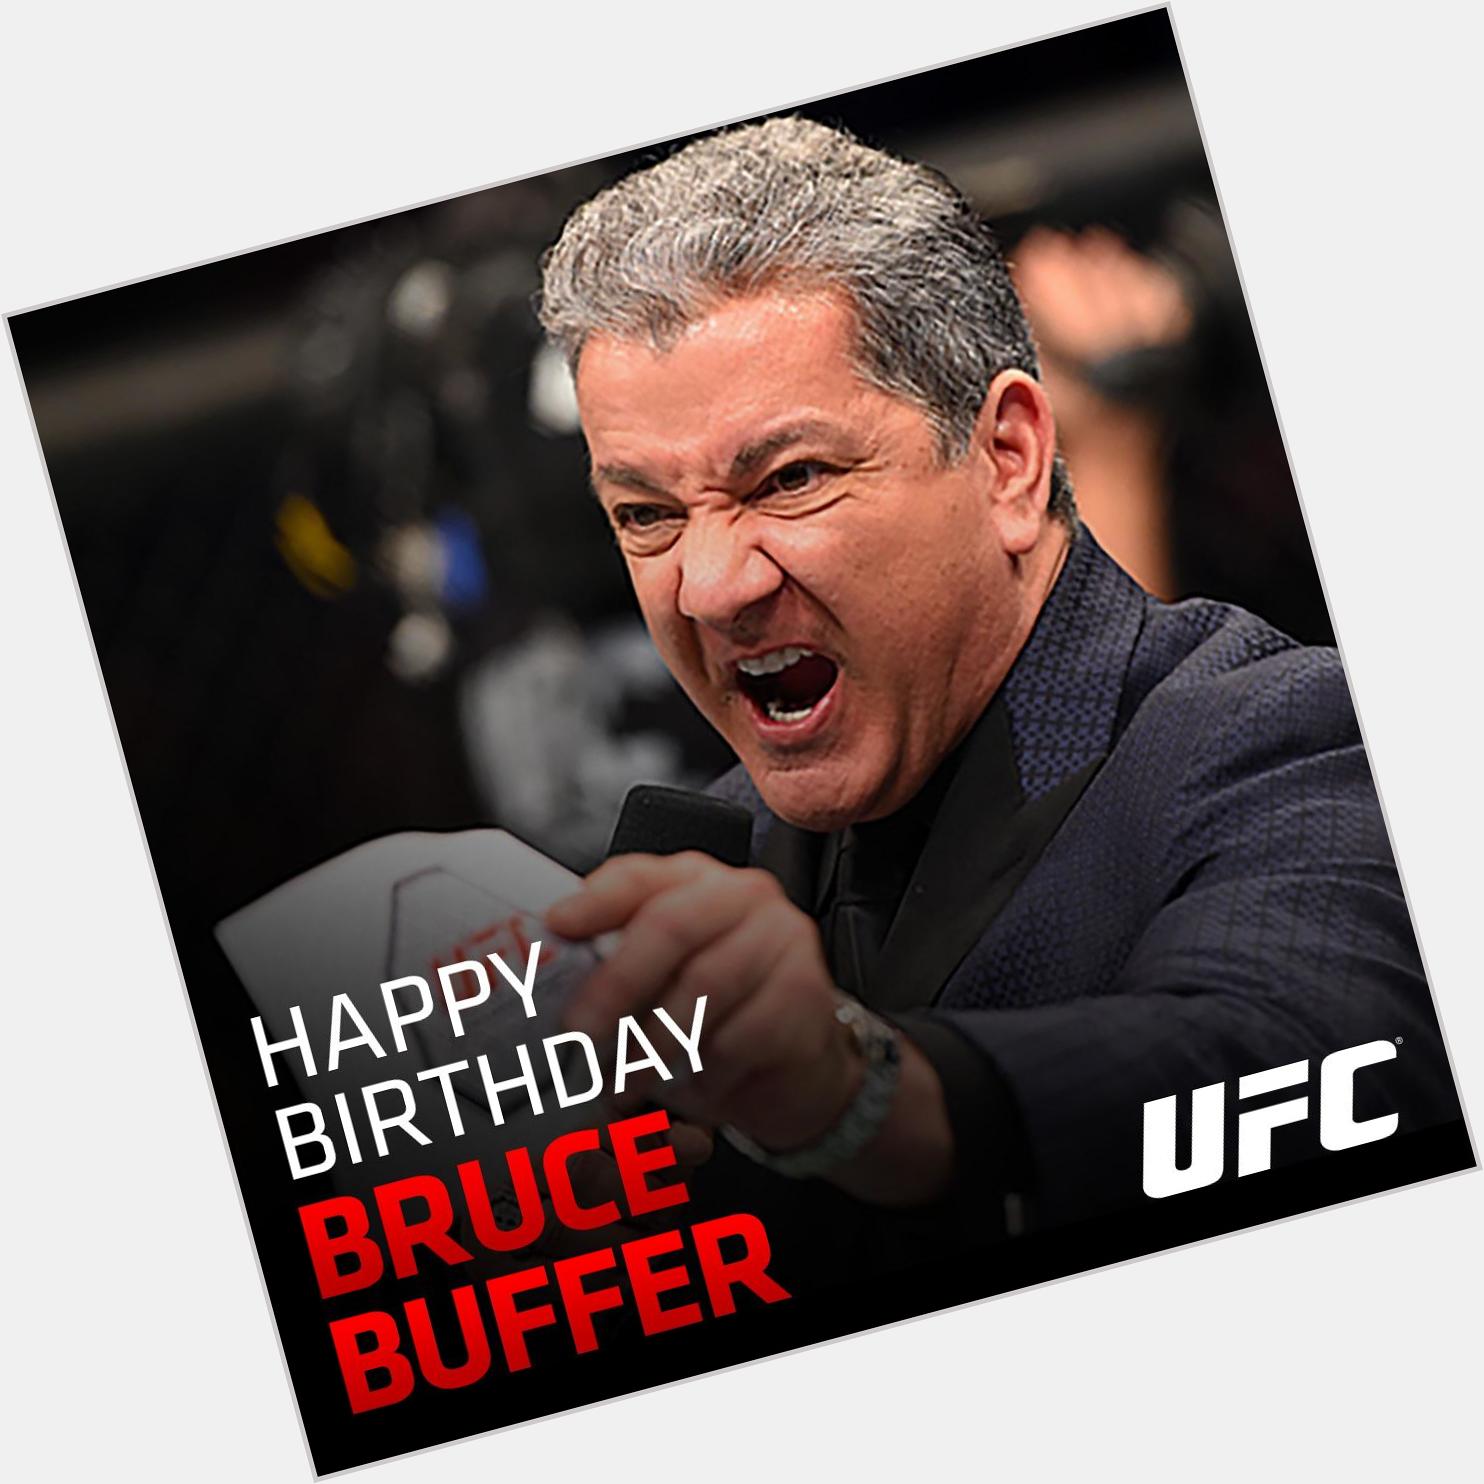   Happy Birthday, happy birthday bruce buffer!!